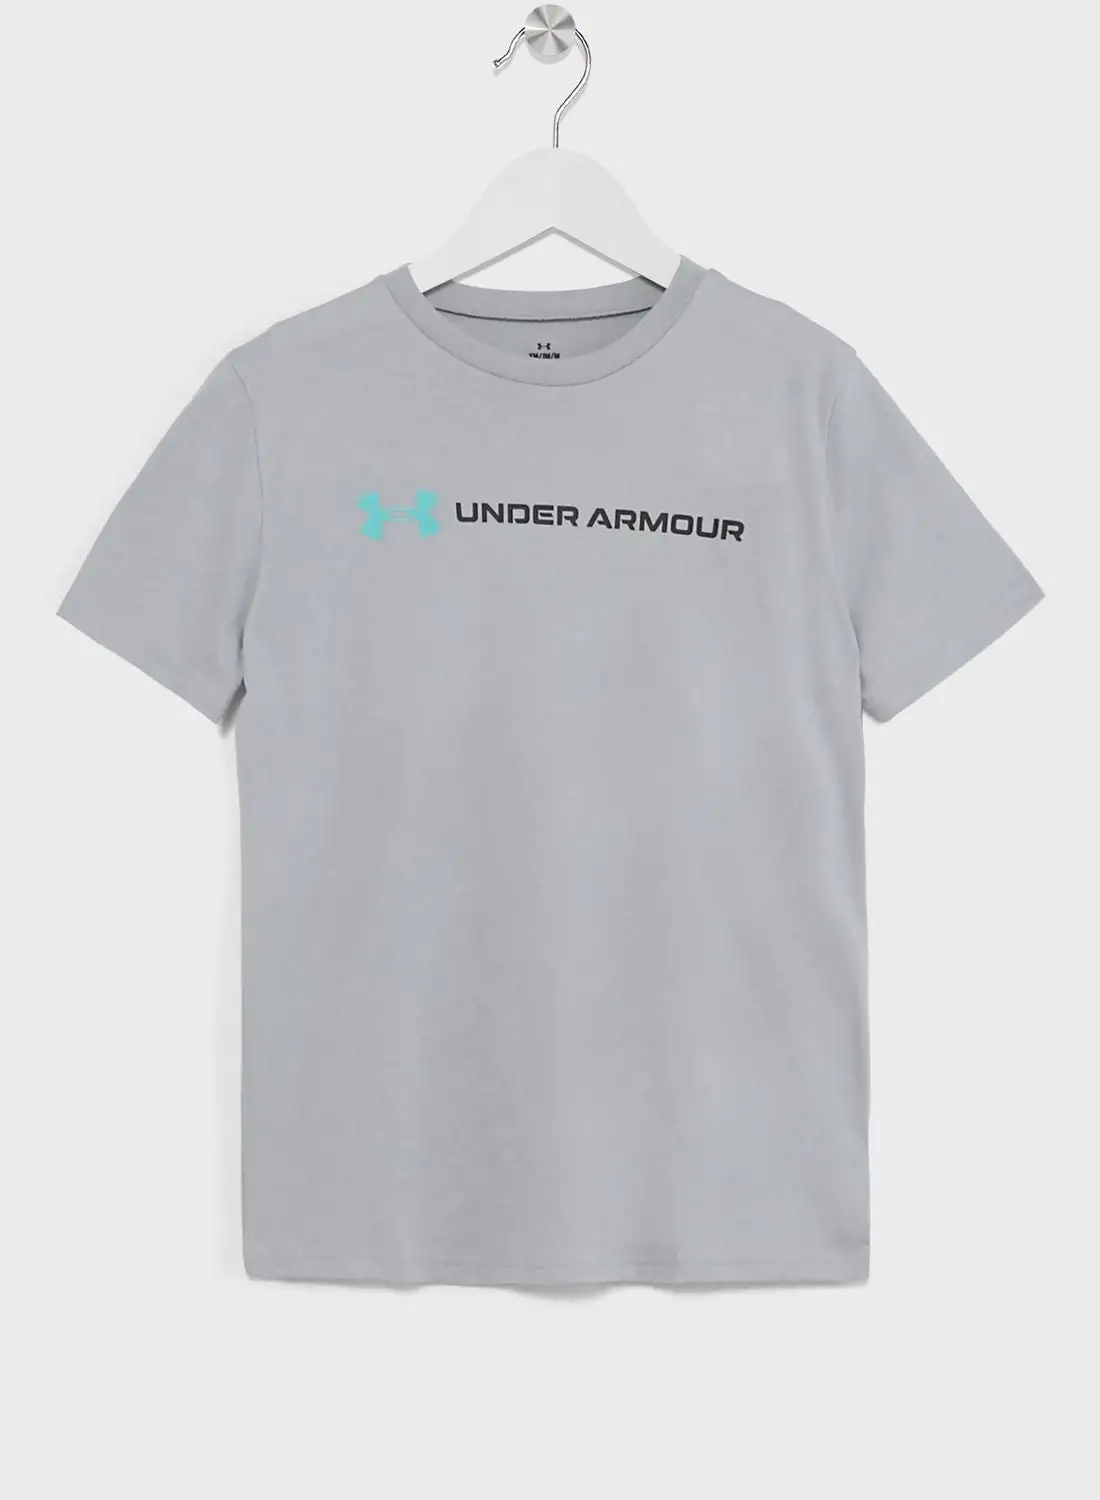 UNDER ARMOUR Boys' Wordmark Logo Short Sleeve T-shirt